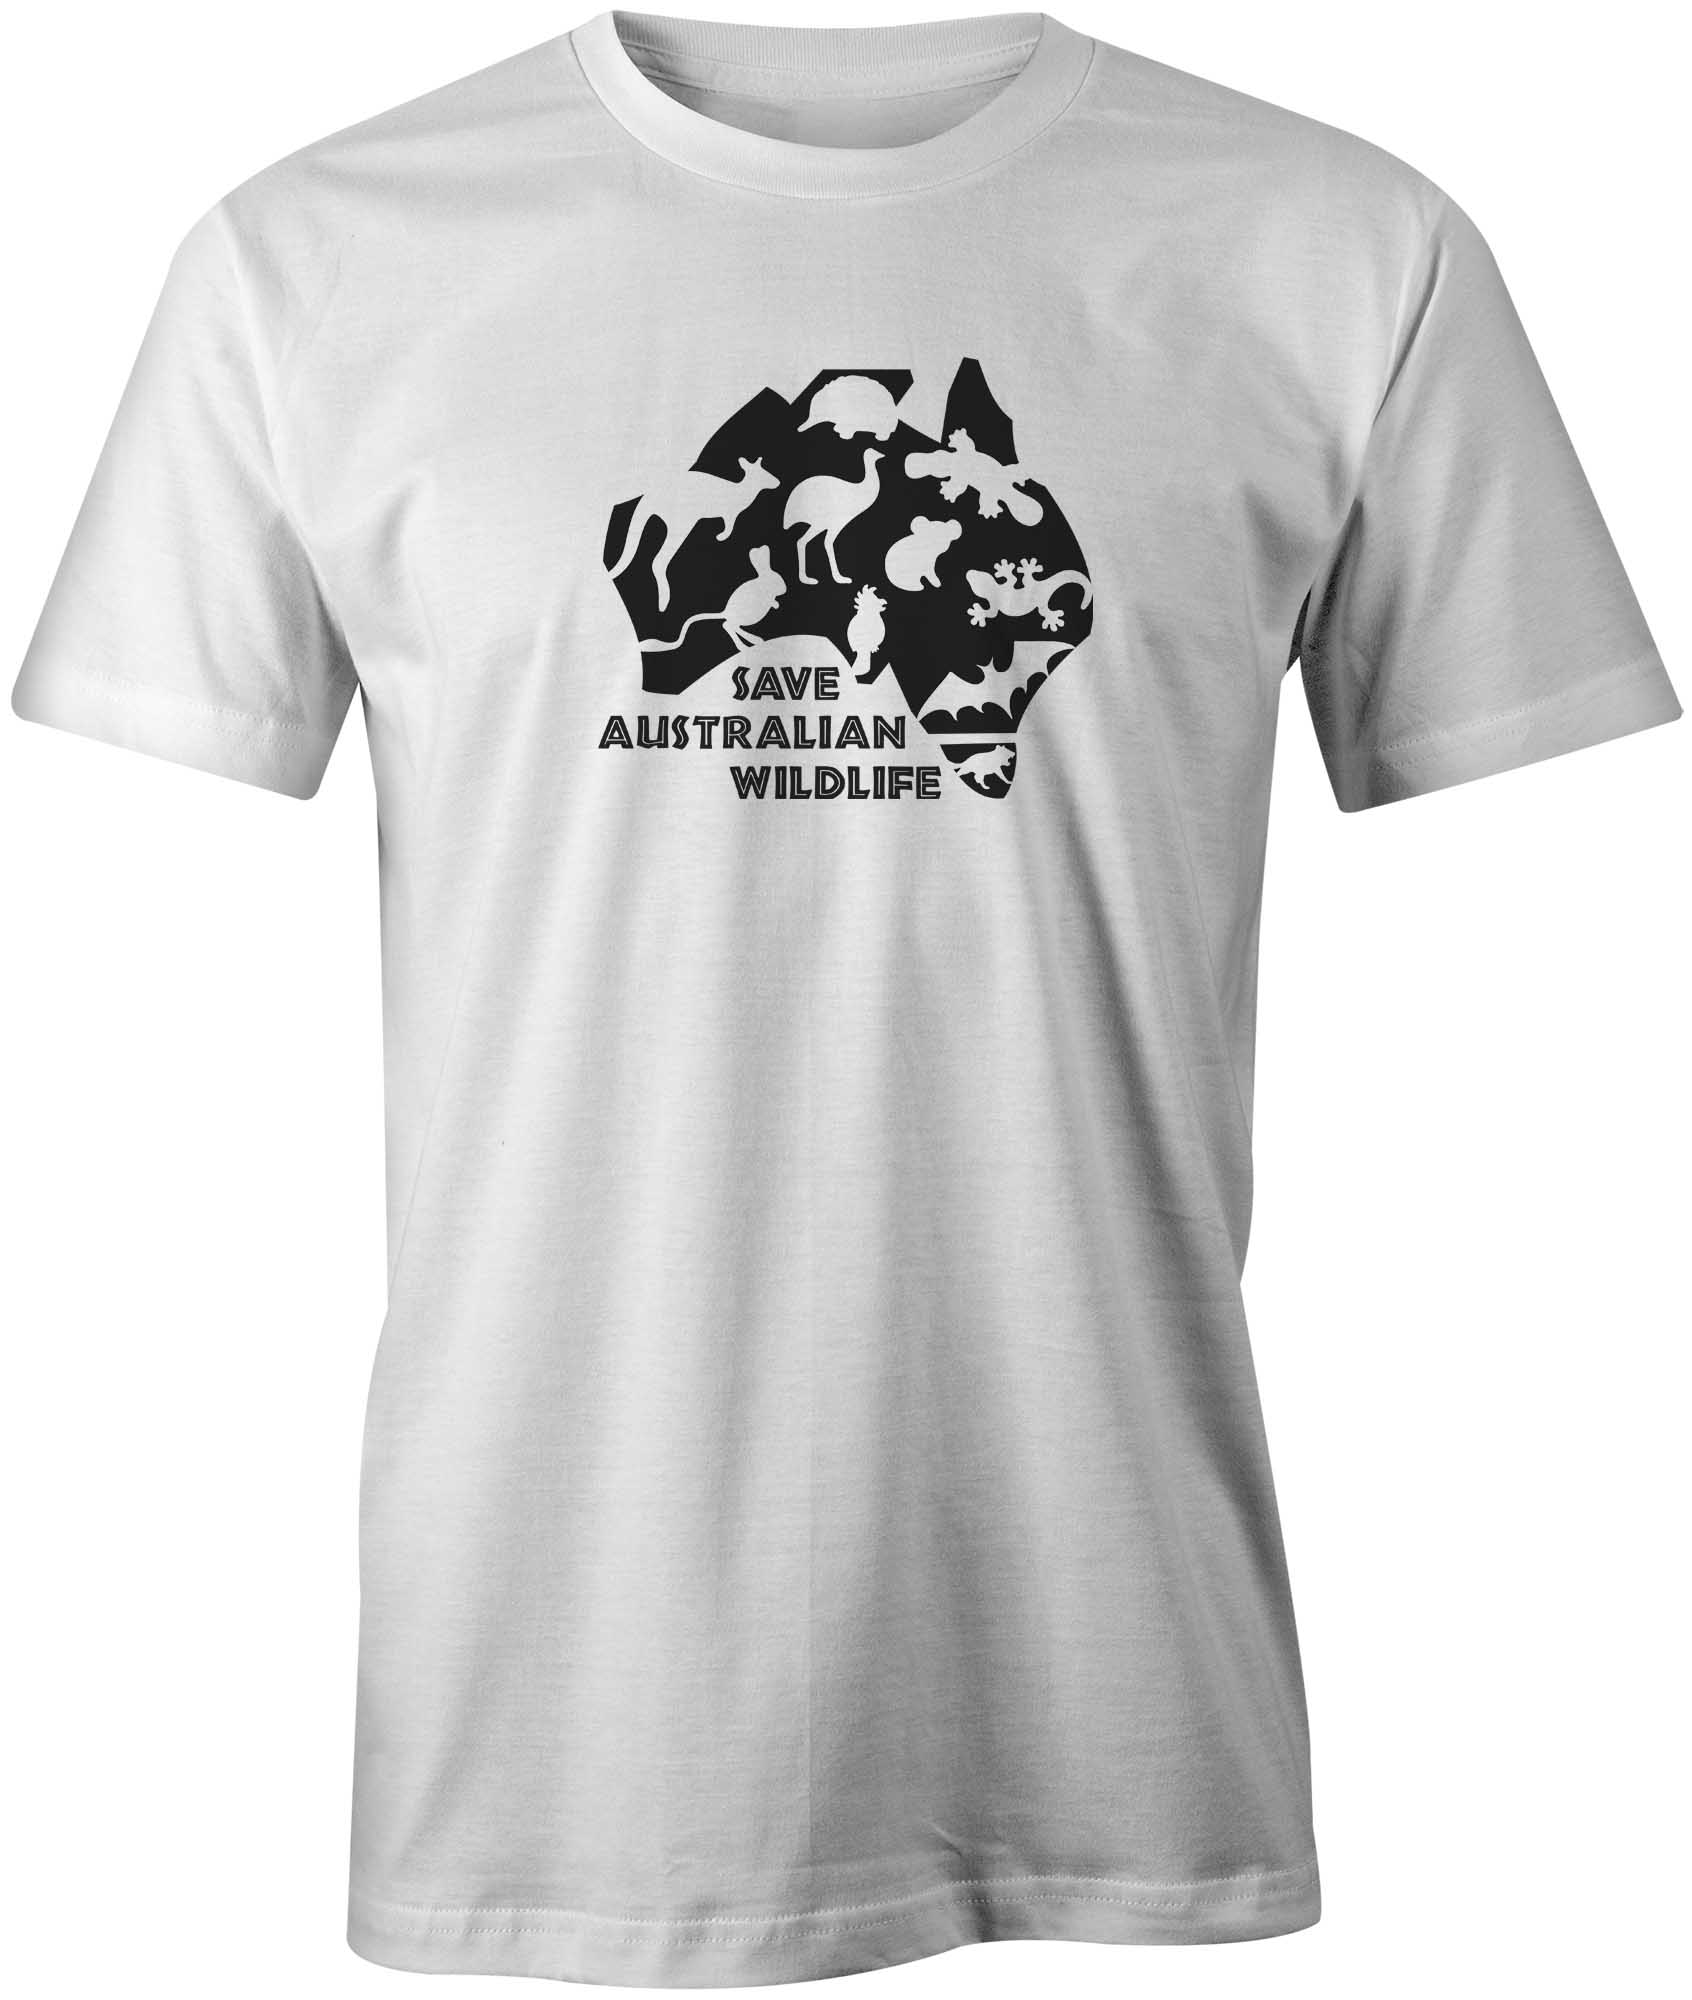 Express Wildlife Save Australian Wildlife T Shirt